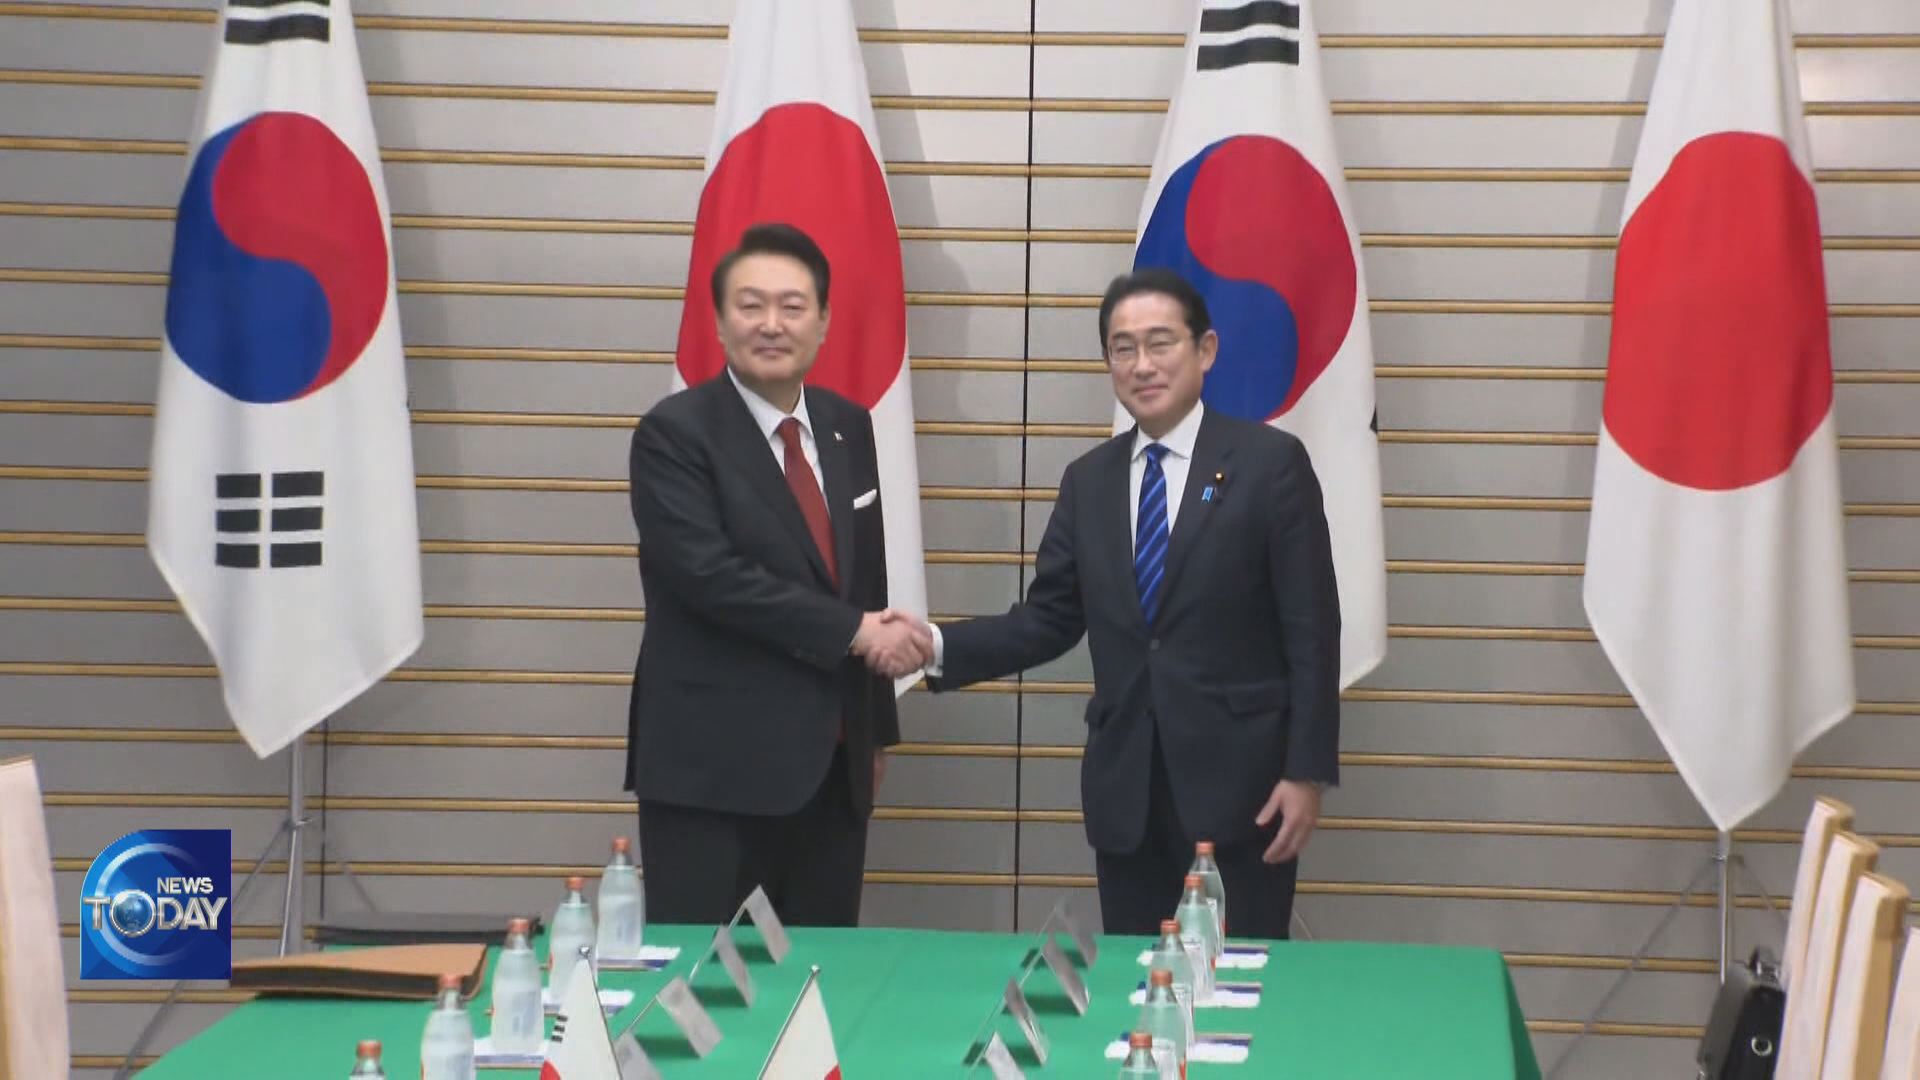 JAPAN’S PM TO VISIT S. KOREA MAY 7-8